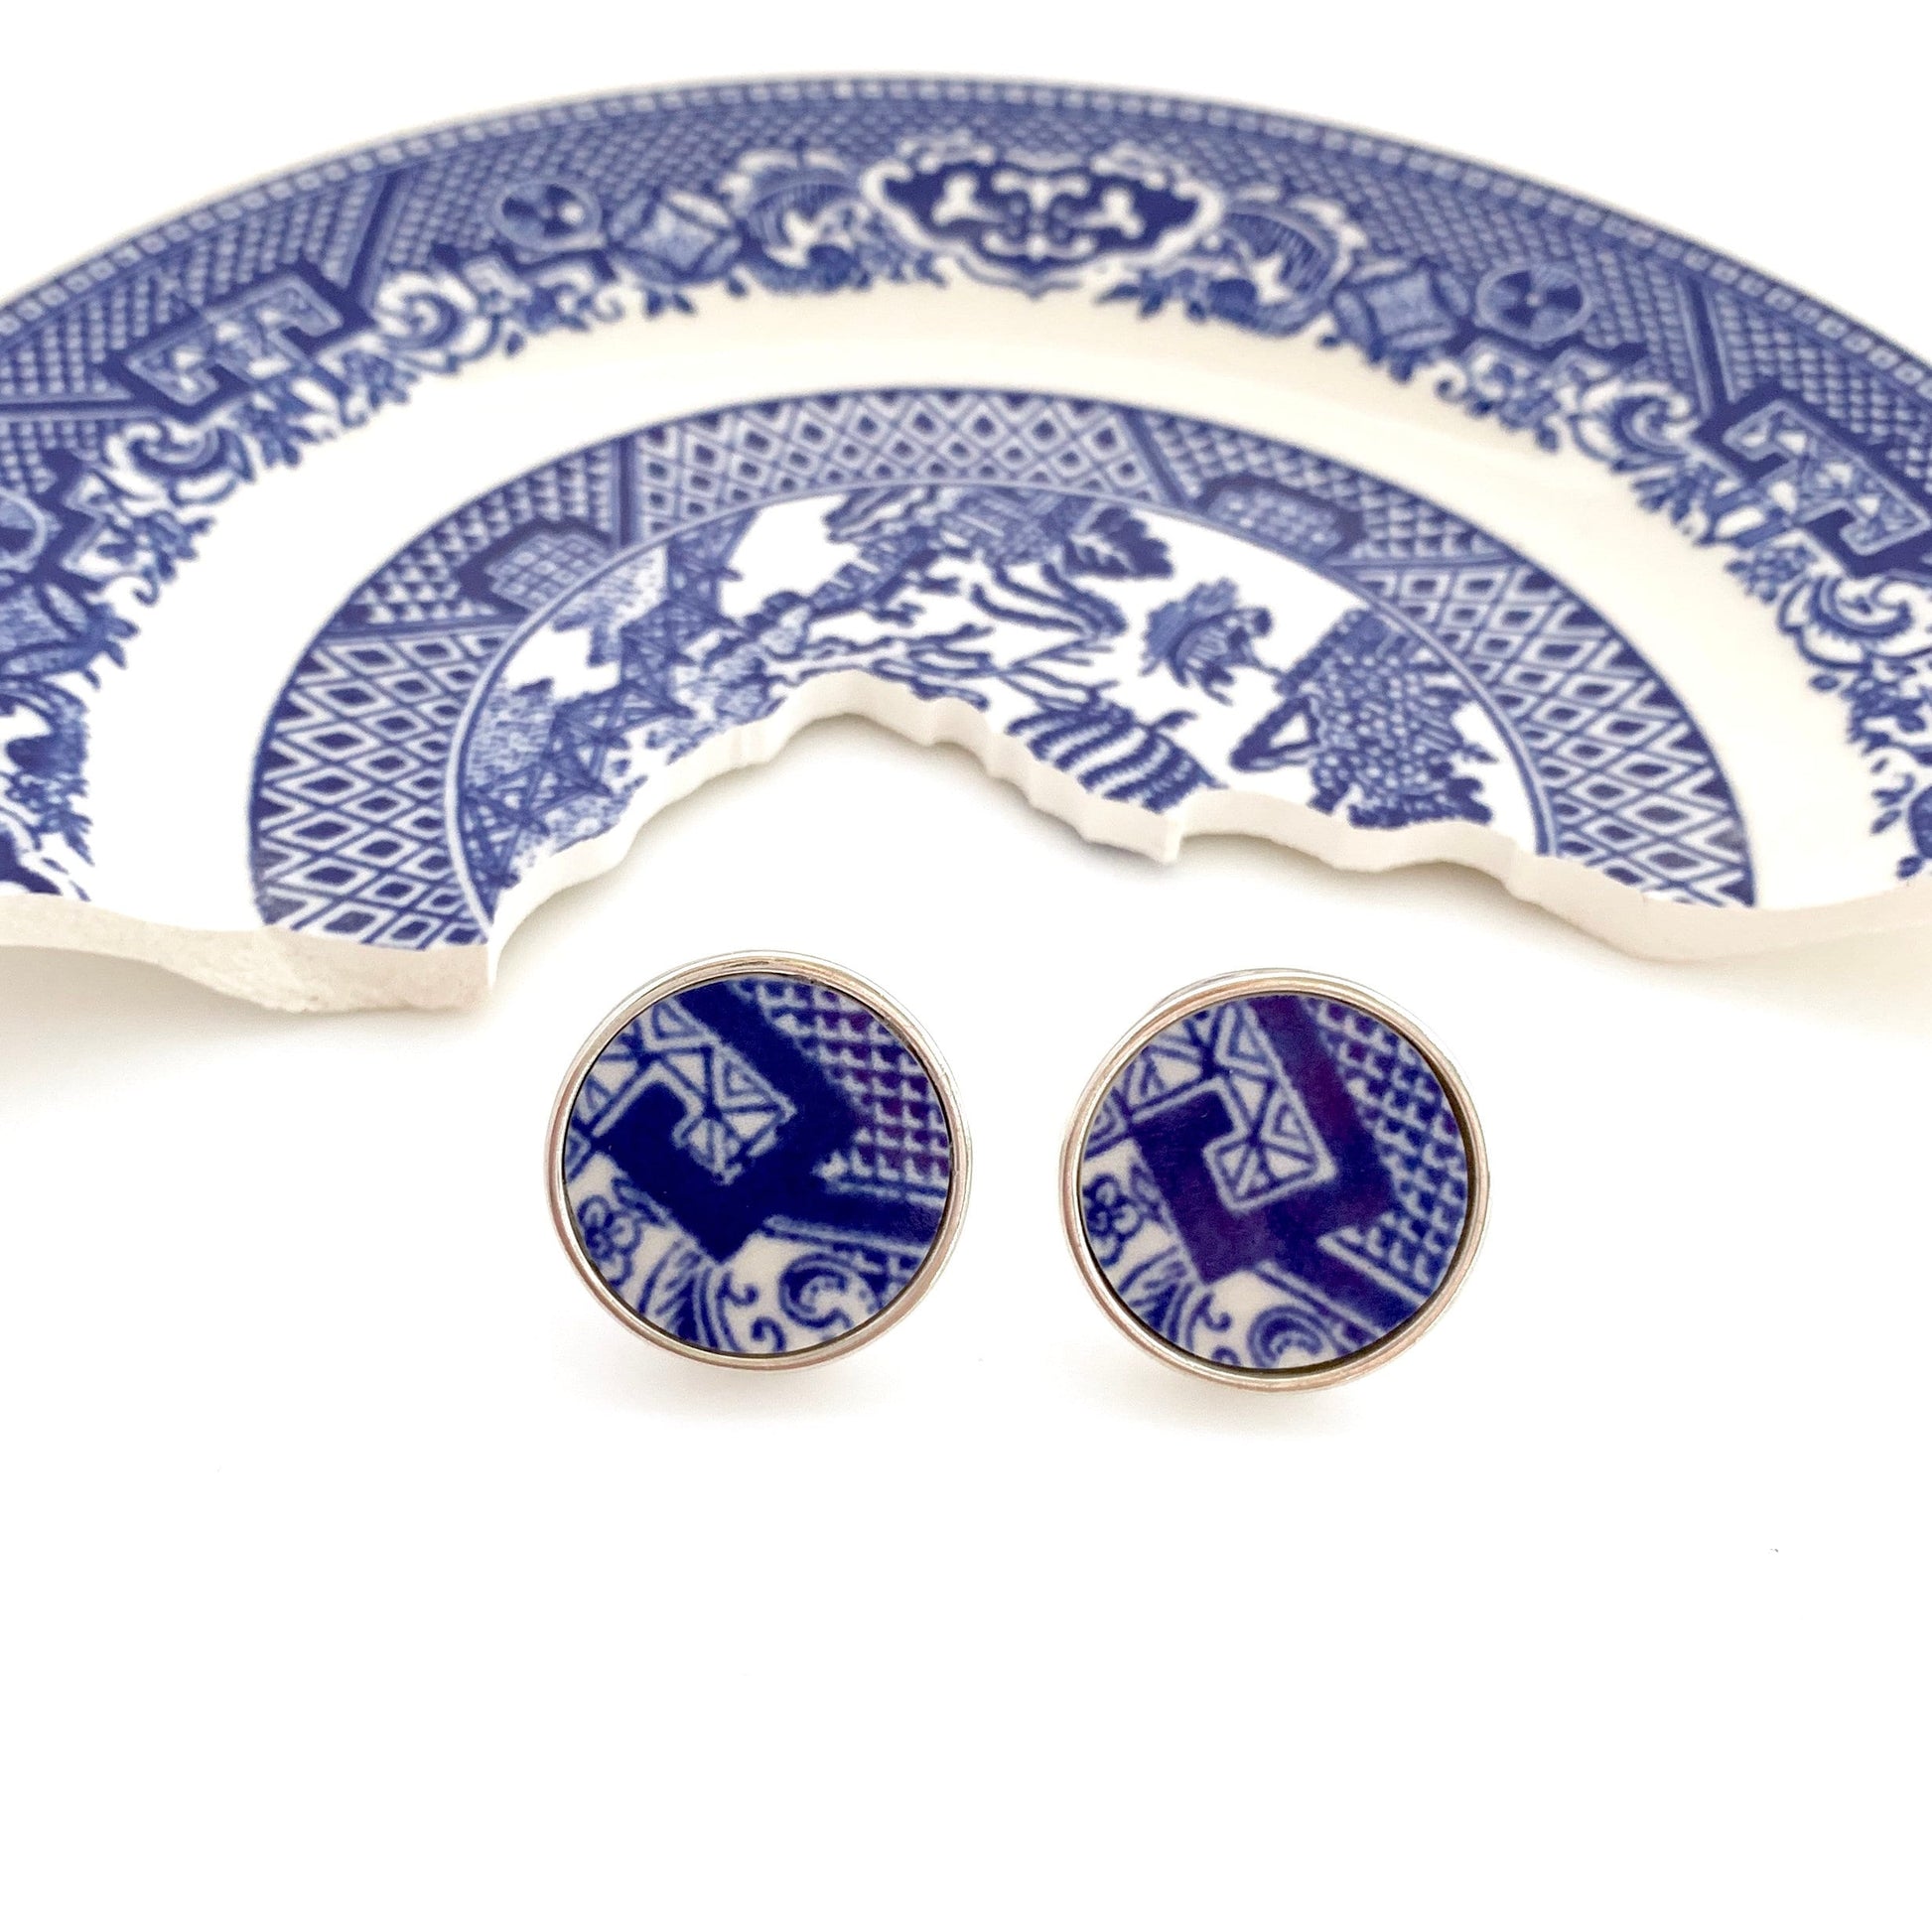 CUSTOM ORDER China Cufflinks Broken China Jewelry Cuff Links Made From Your China Memorial Jewelry Custom Jewelry